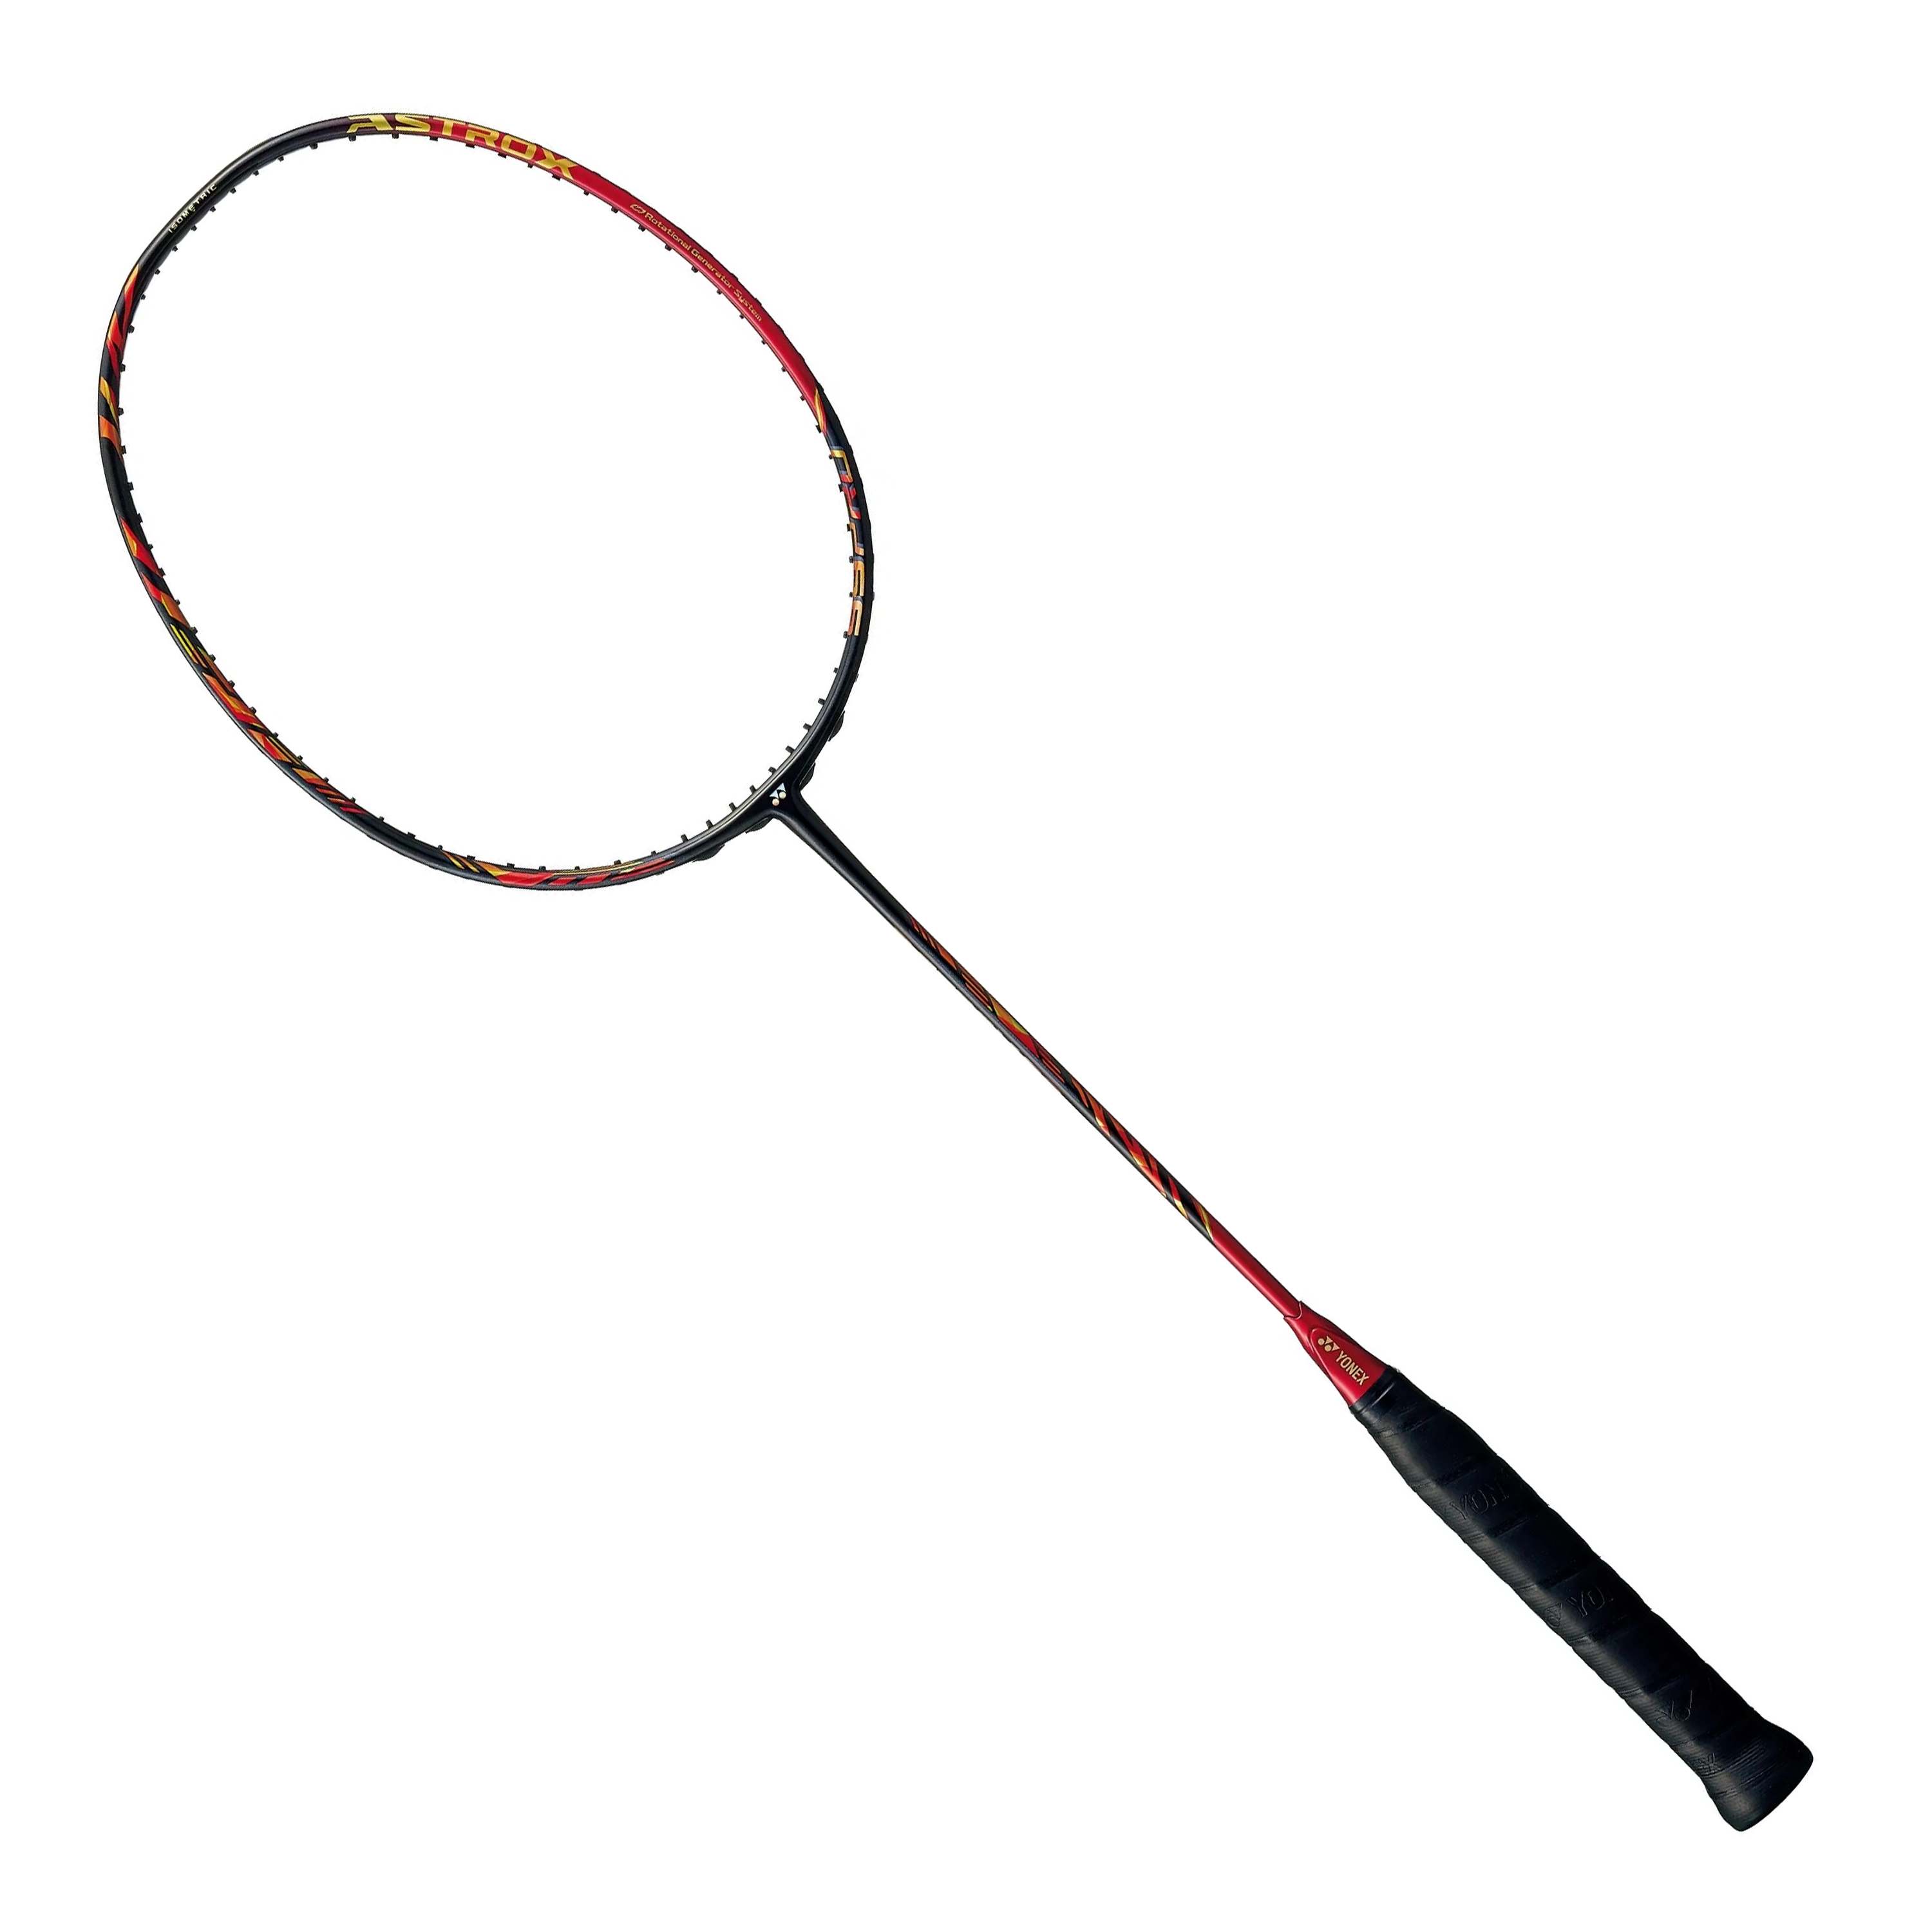 Yonex Astrox 99 Pro Badminton Racquet Cherry Sunburst 4U(83g)G5